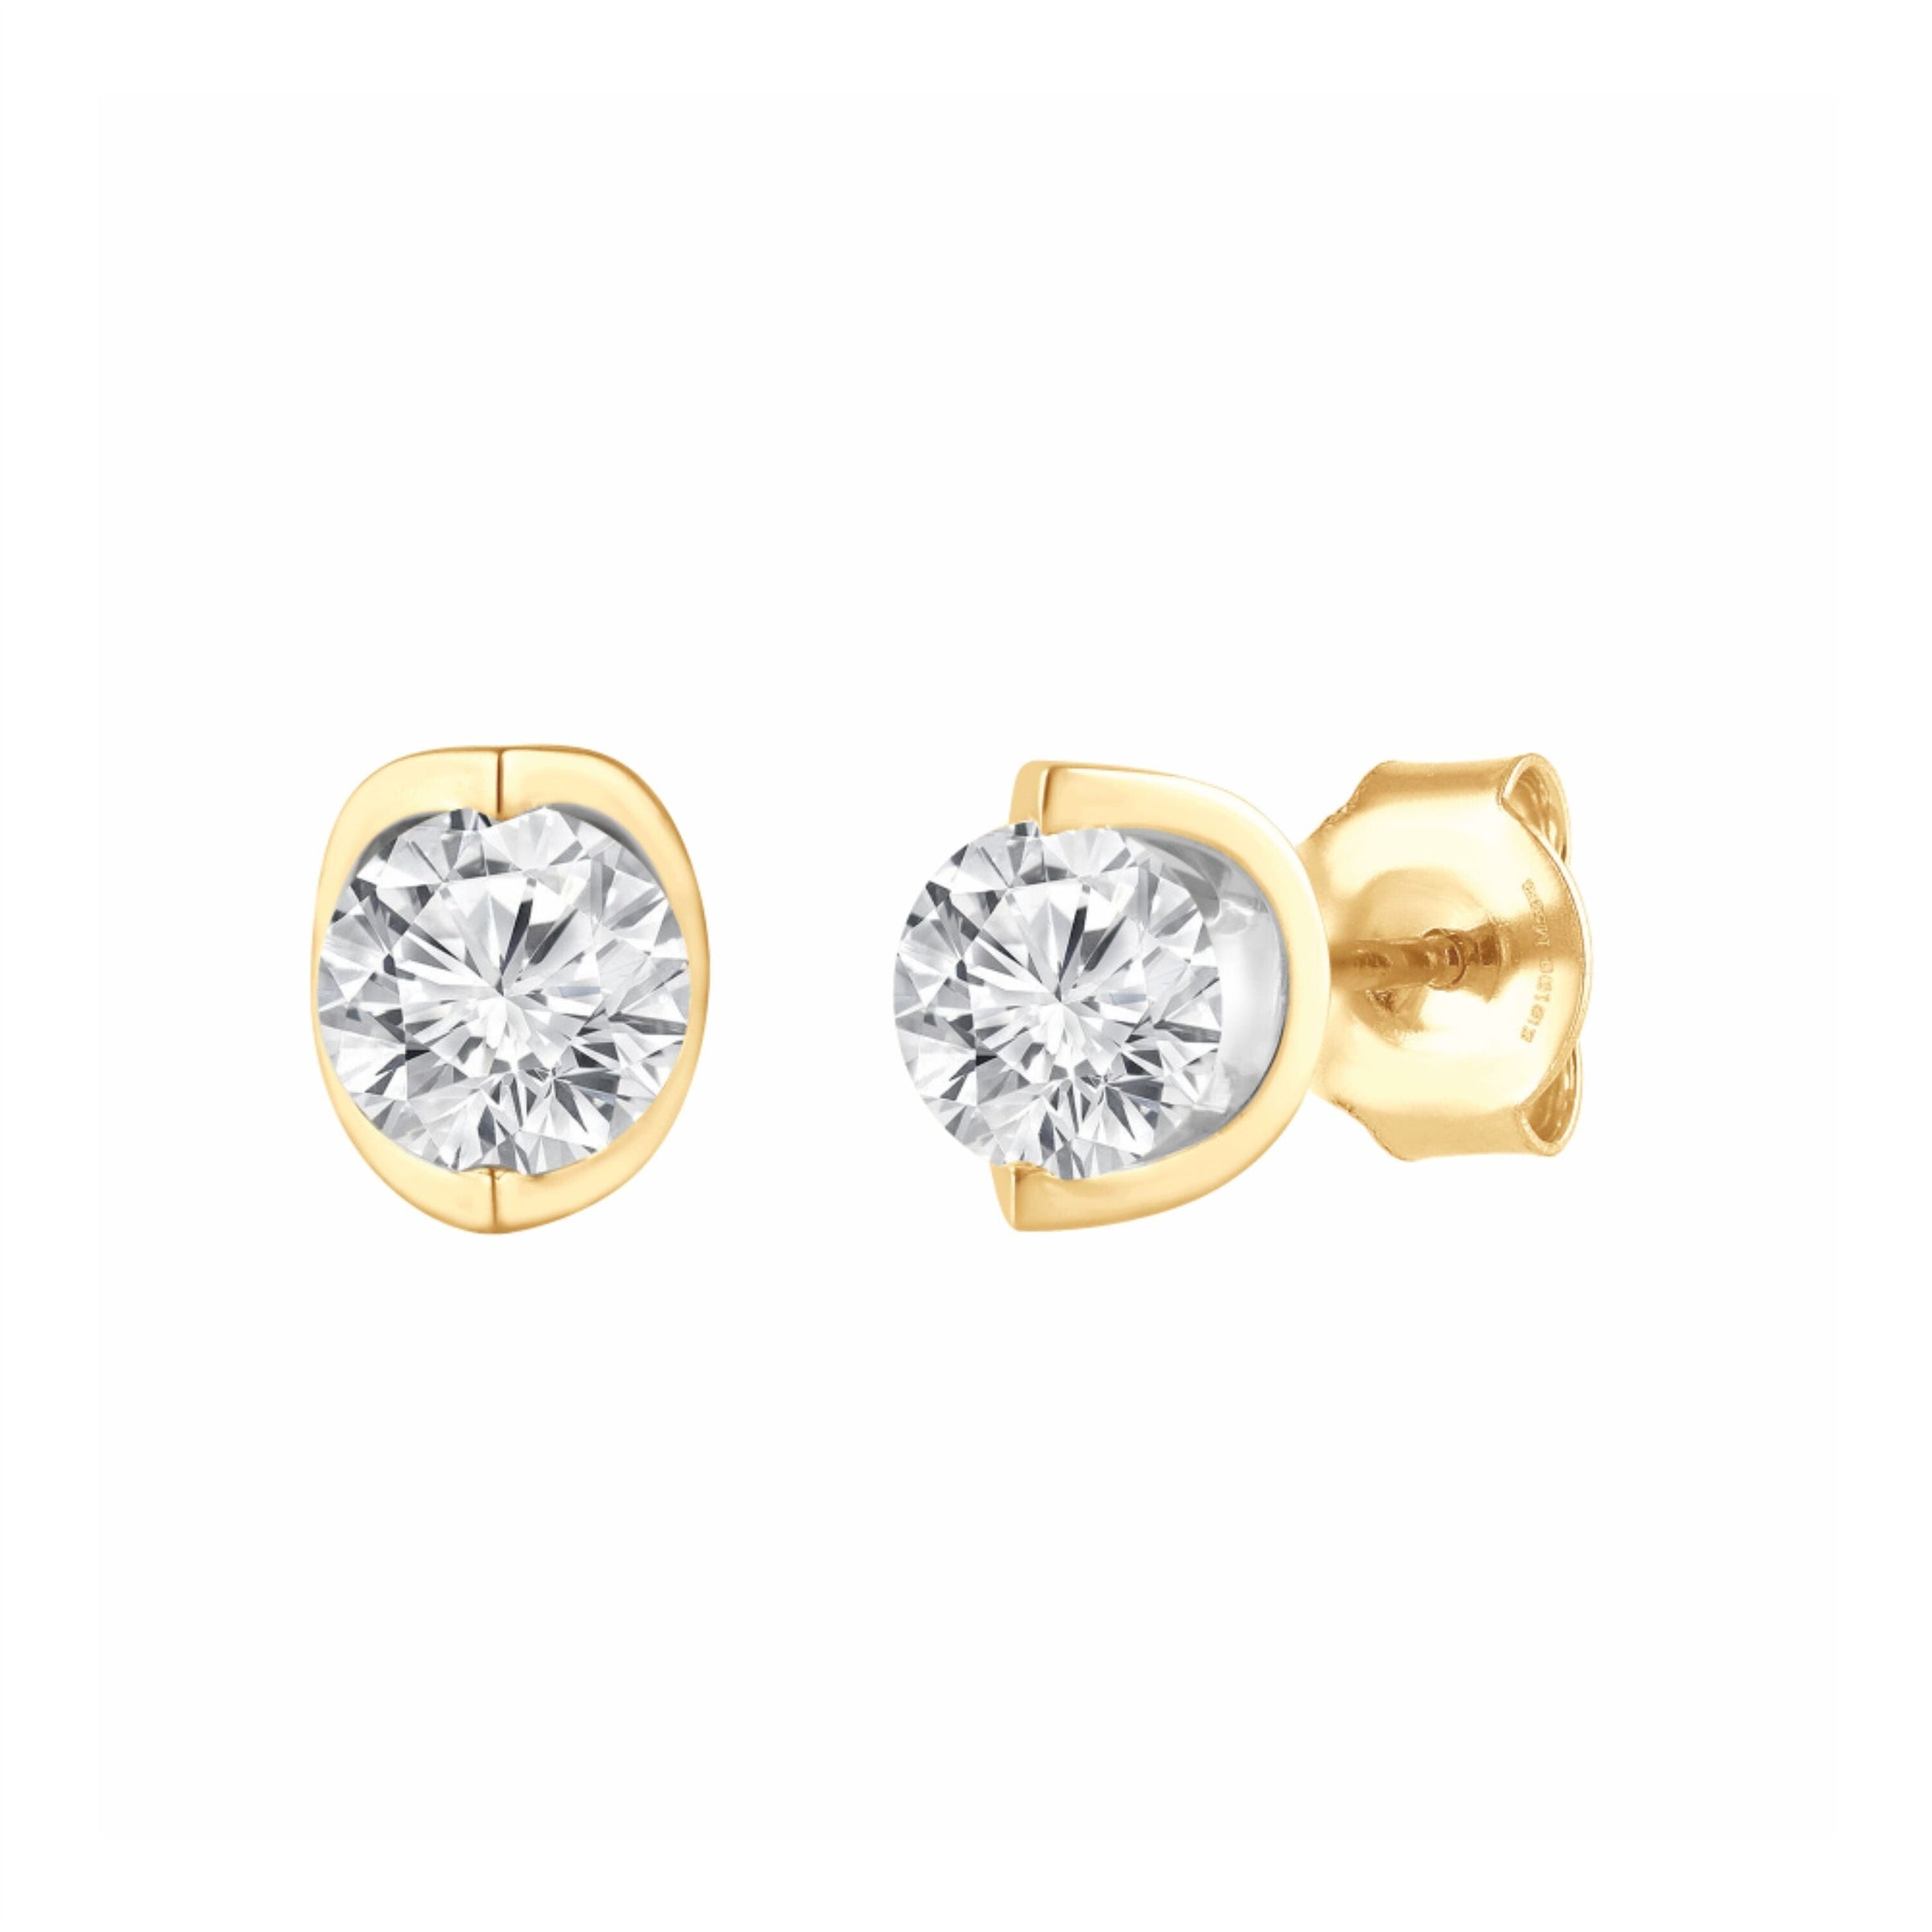 Meera Bezel Look 1.00ct Laboratory Grown Solitaire Diamond Earrings in 9ct Yellow Gold Earrings Bevilles 